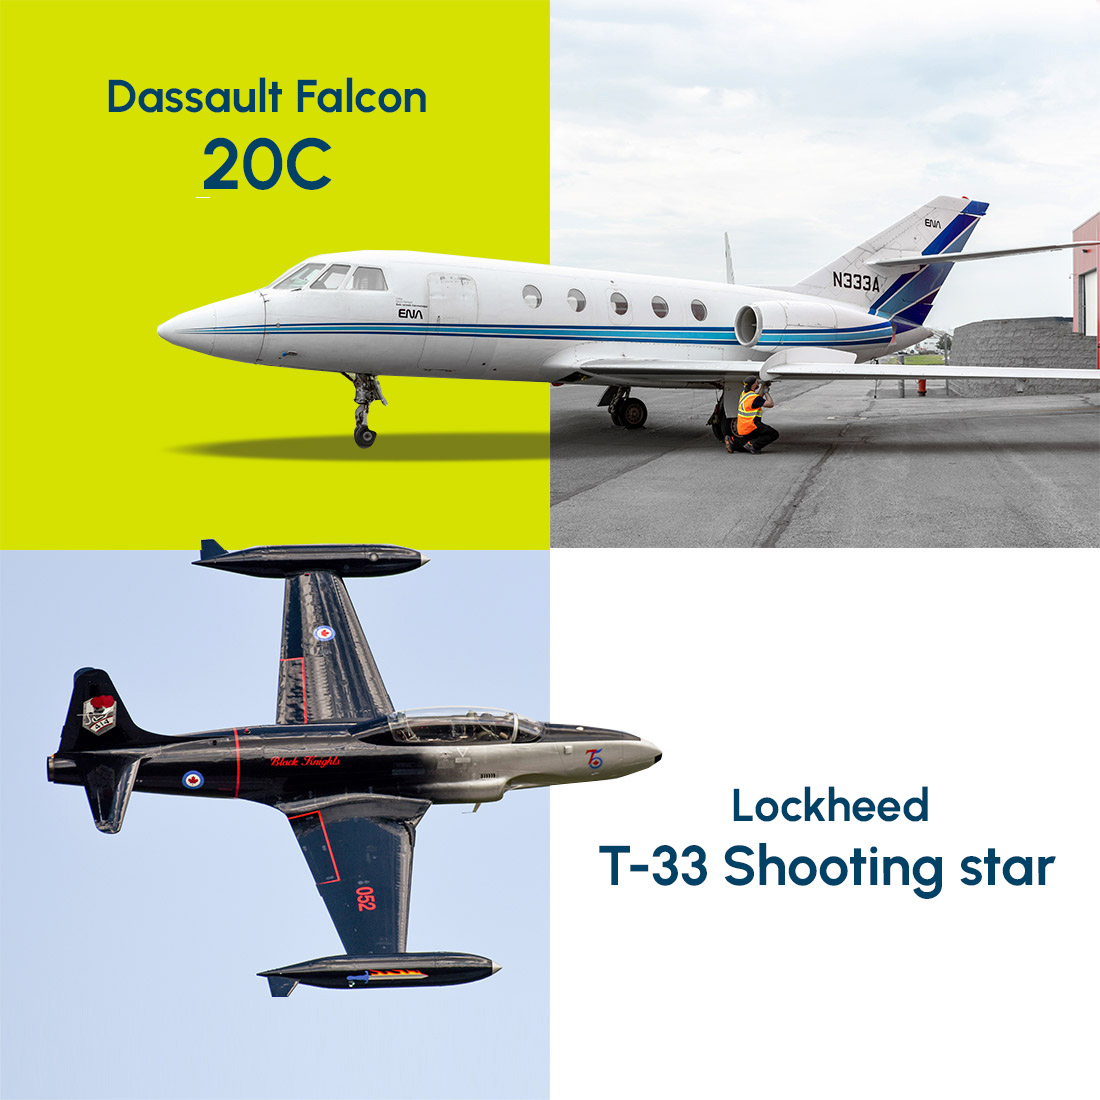 Dassault Falcon 20C